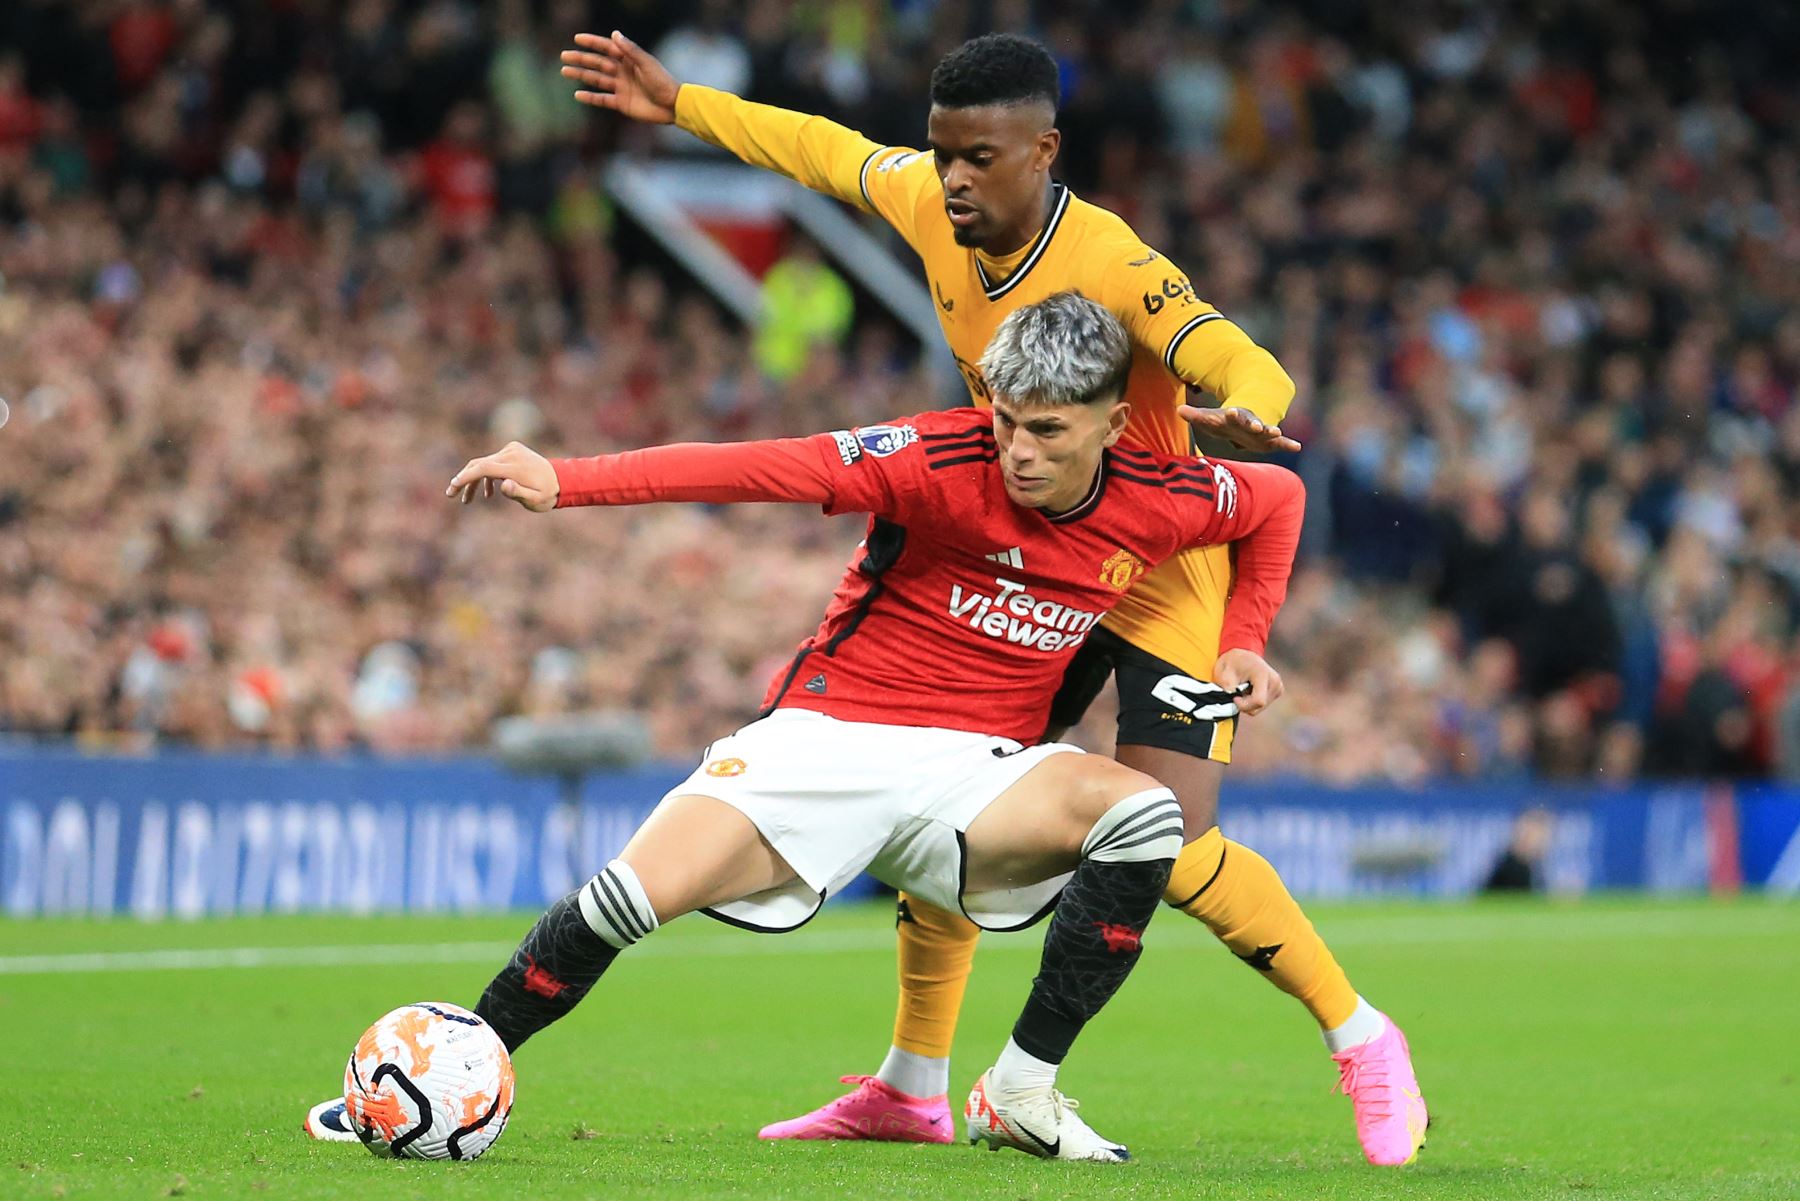 Premier League: Manchester United derrota por 1-0 al Wolverhampton con gol de Varane